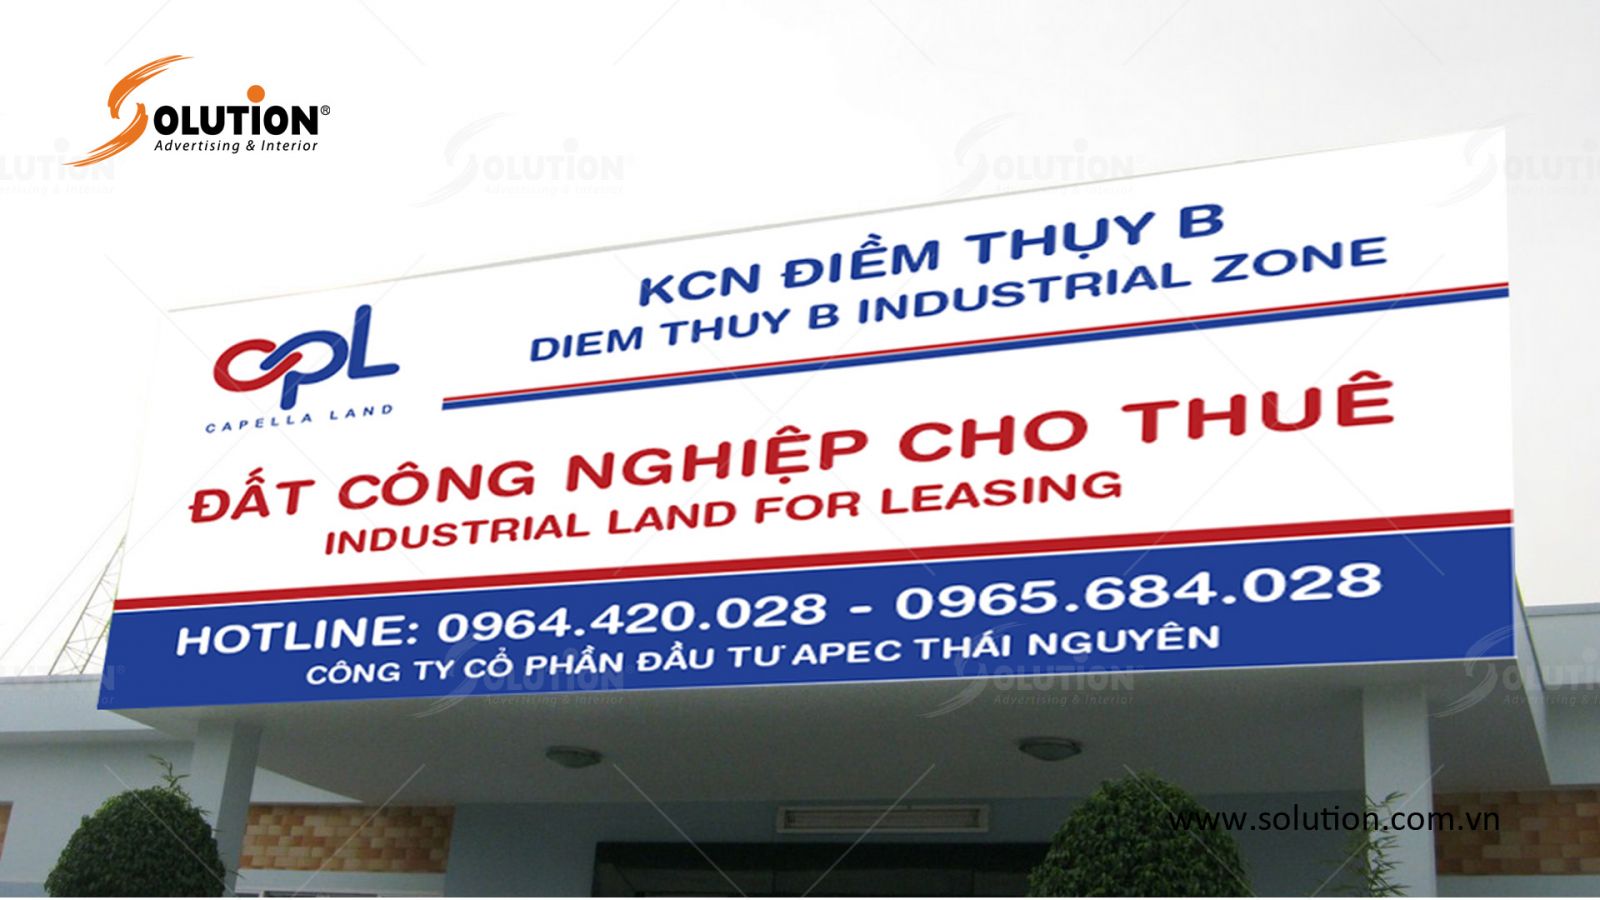 thiet-ke-bo-nhan-dien-thuong-hieu-cpl-2